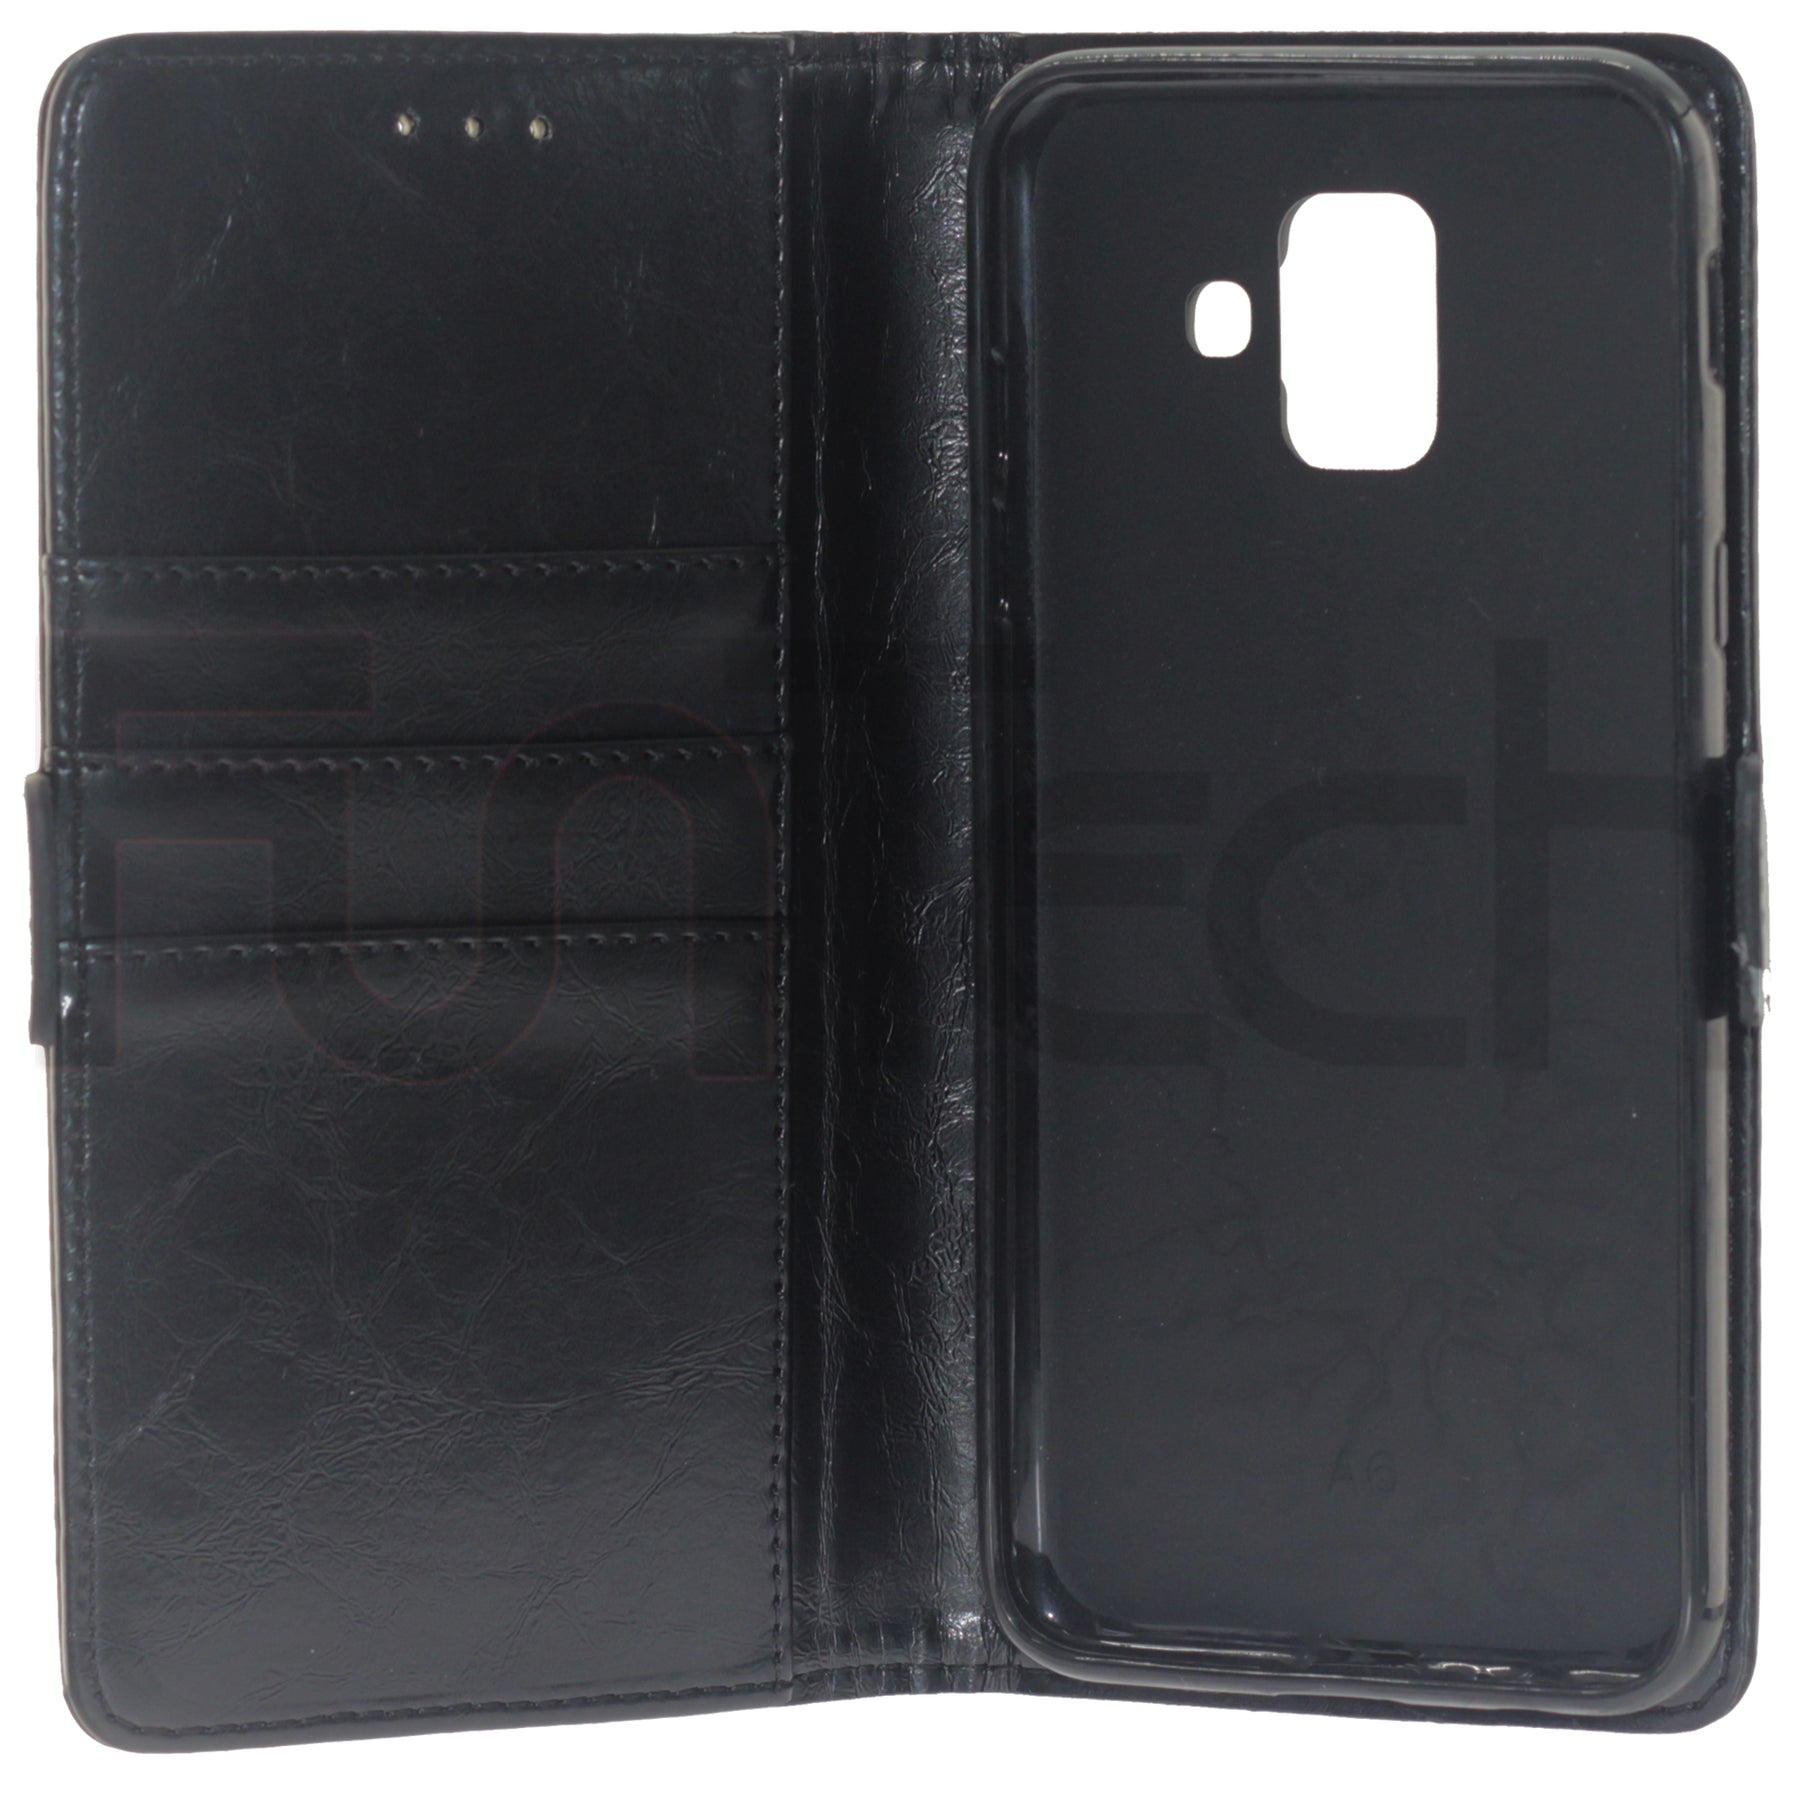 Samsung A6 2018, Leather Wallet Case, Color Black.